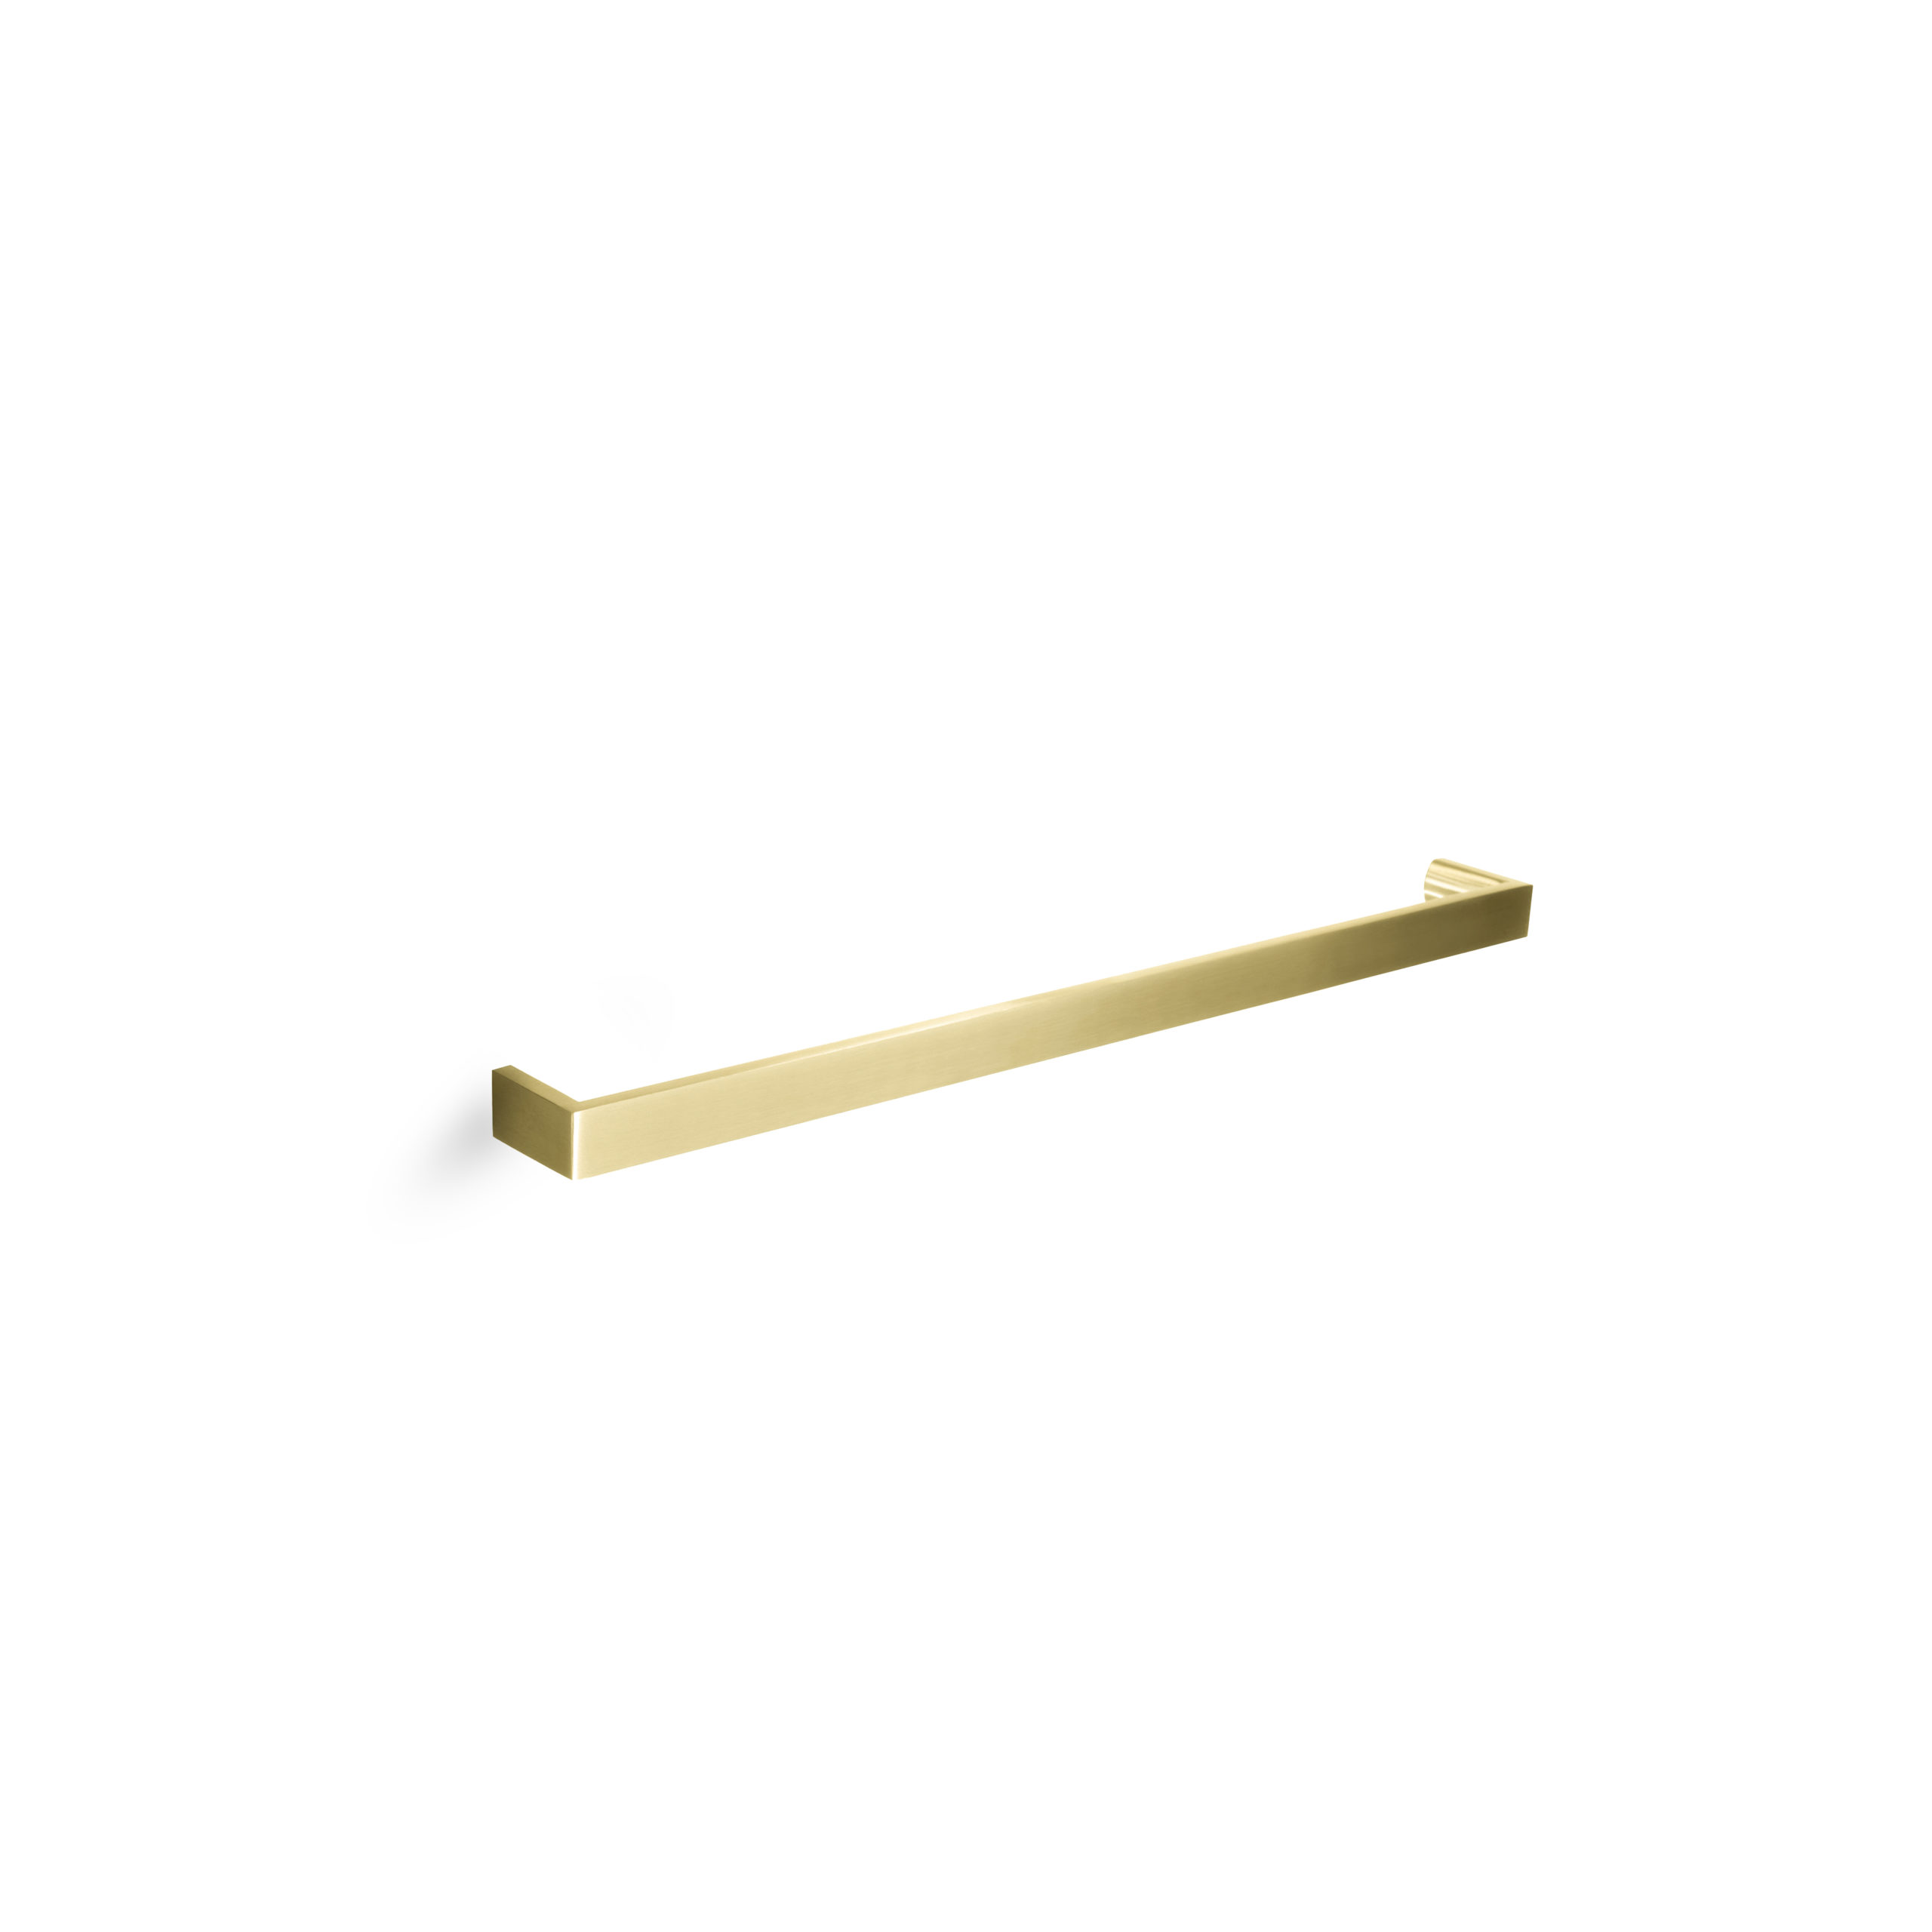 Satin brass modern door handle - surface mount - 18 inch length - product featured image - SKU I 501-1.1 SBZ